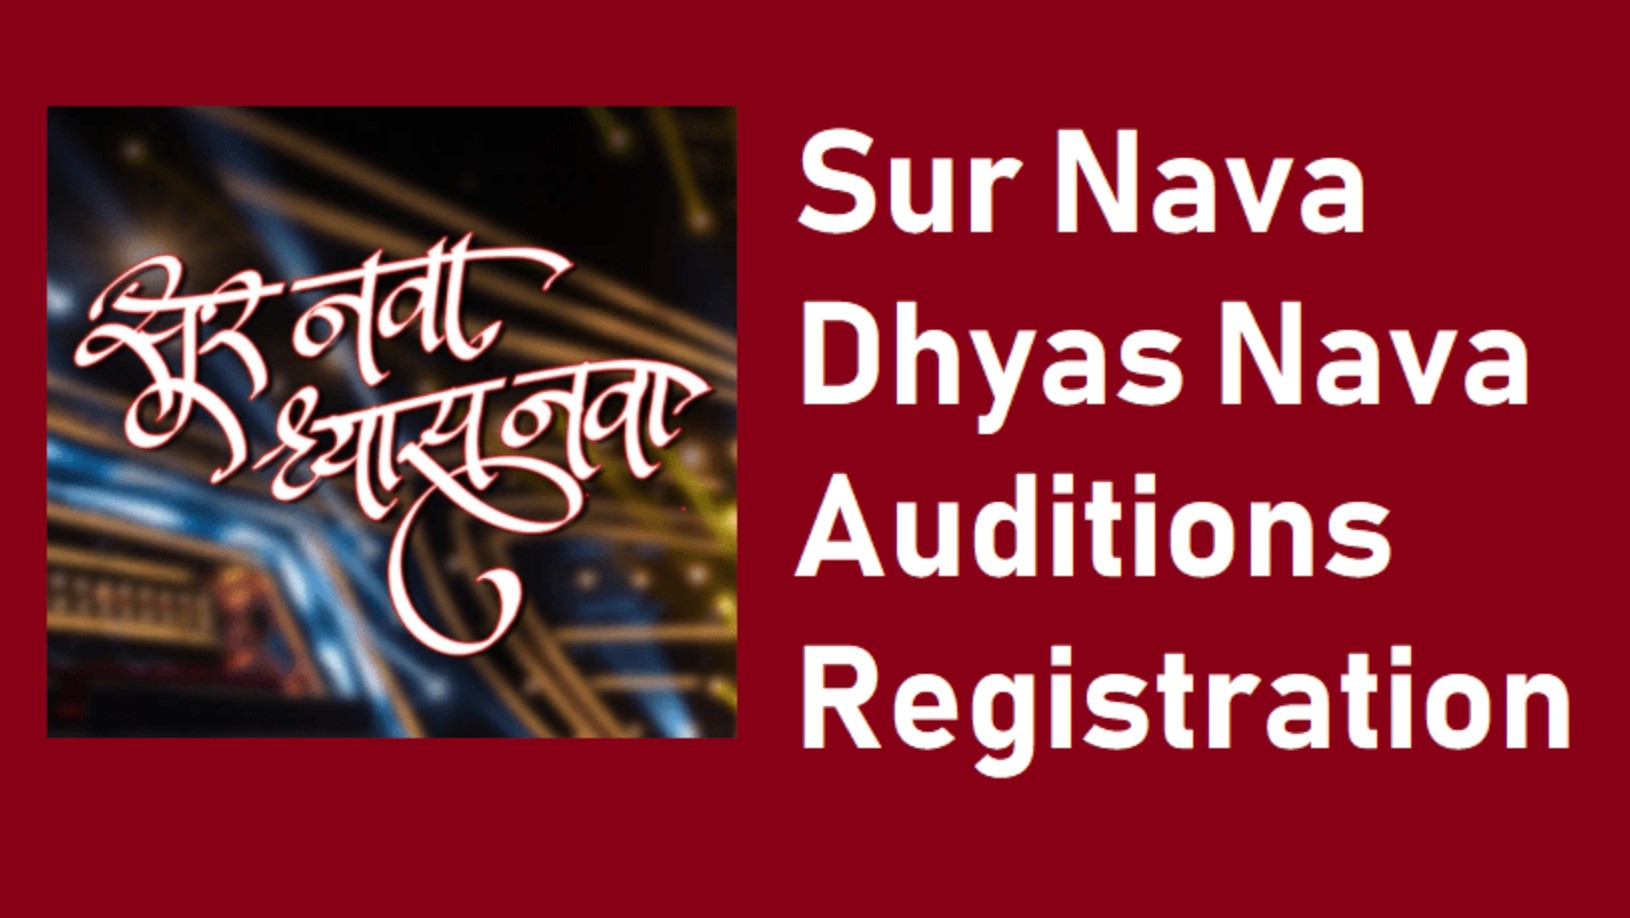 Sur Nava Dhyas Nava 5 Registration Form 2022 Auditions